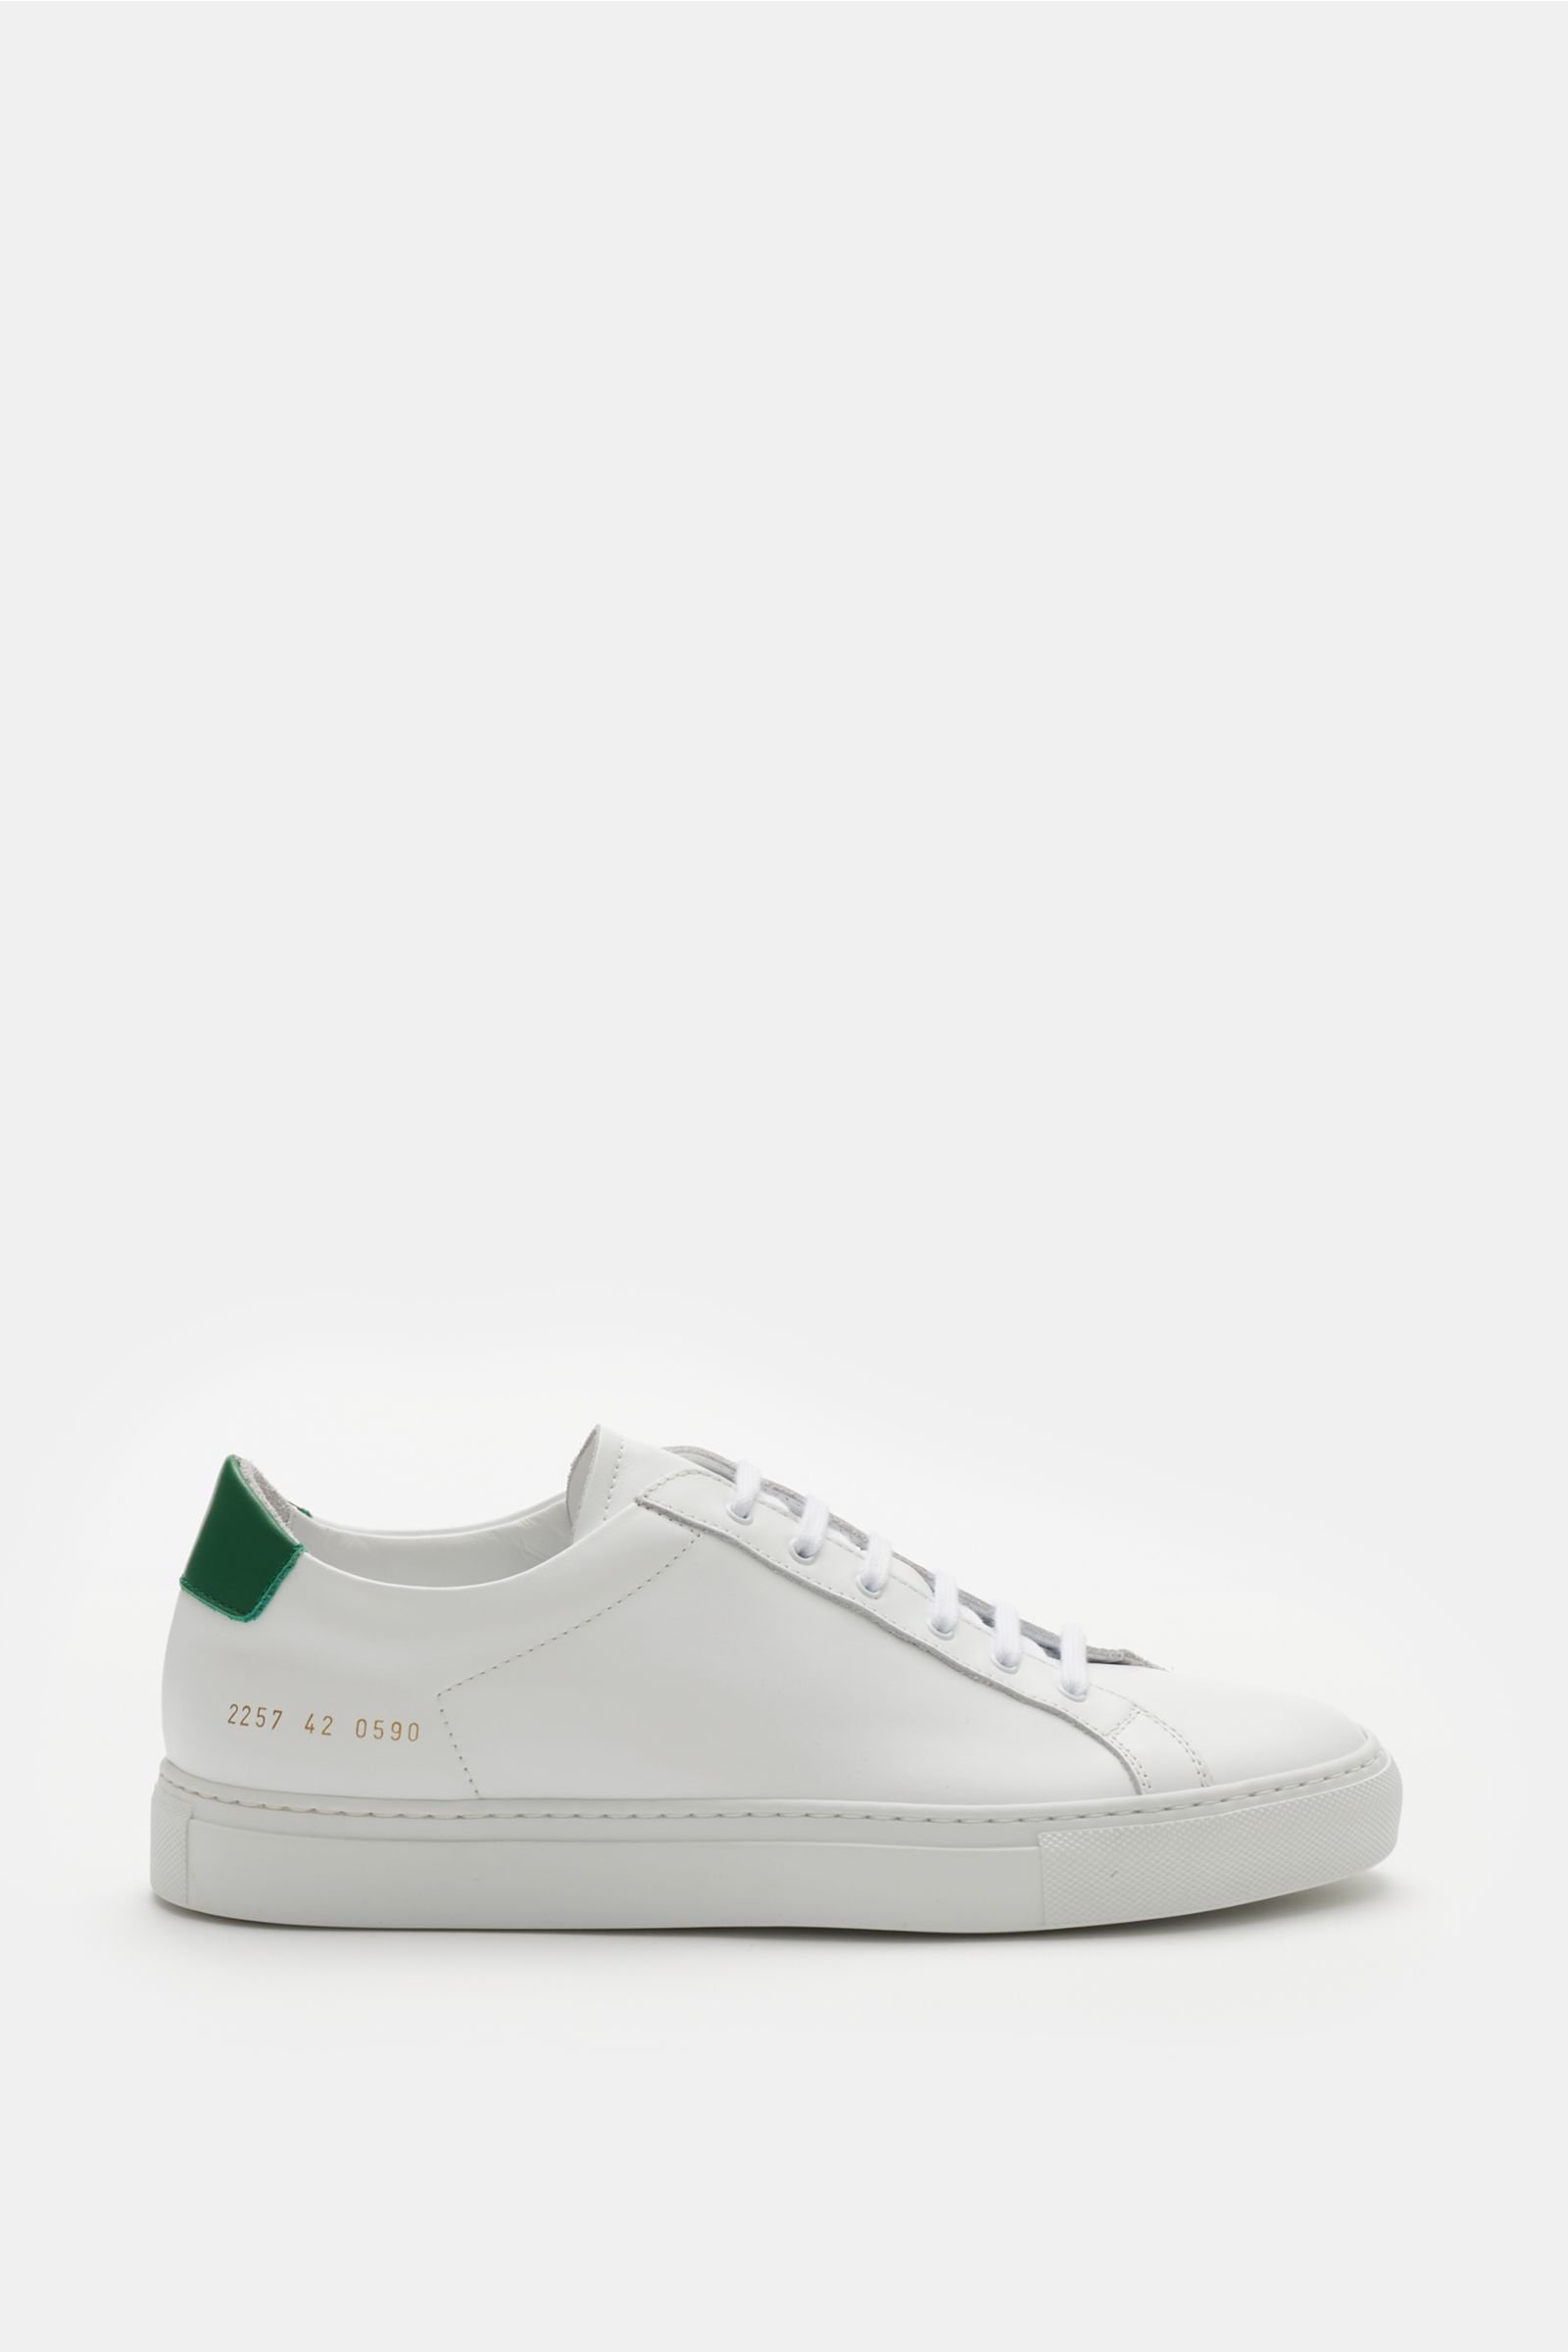 Sneaker 'Retro' weiß/grün